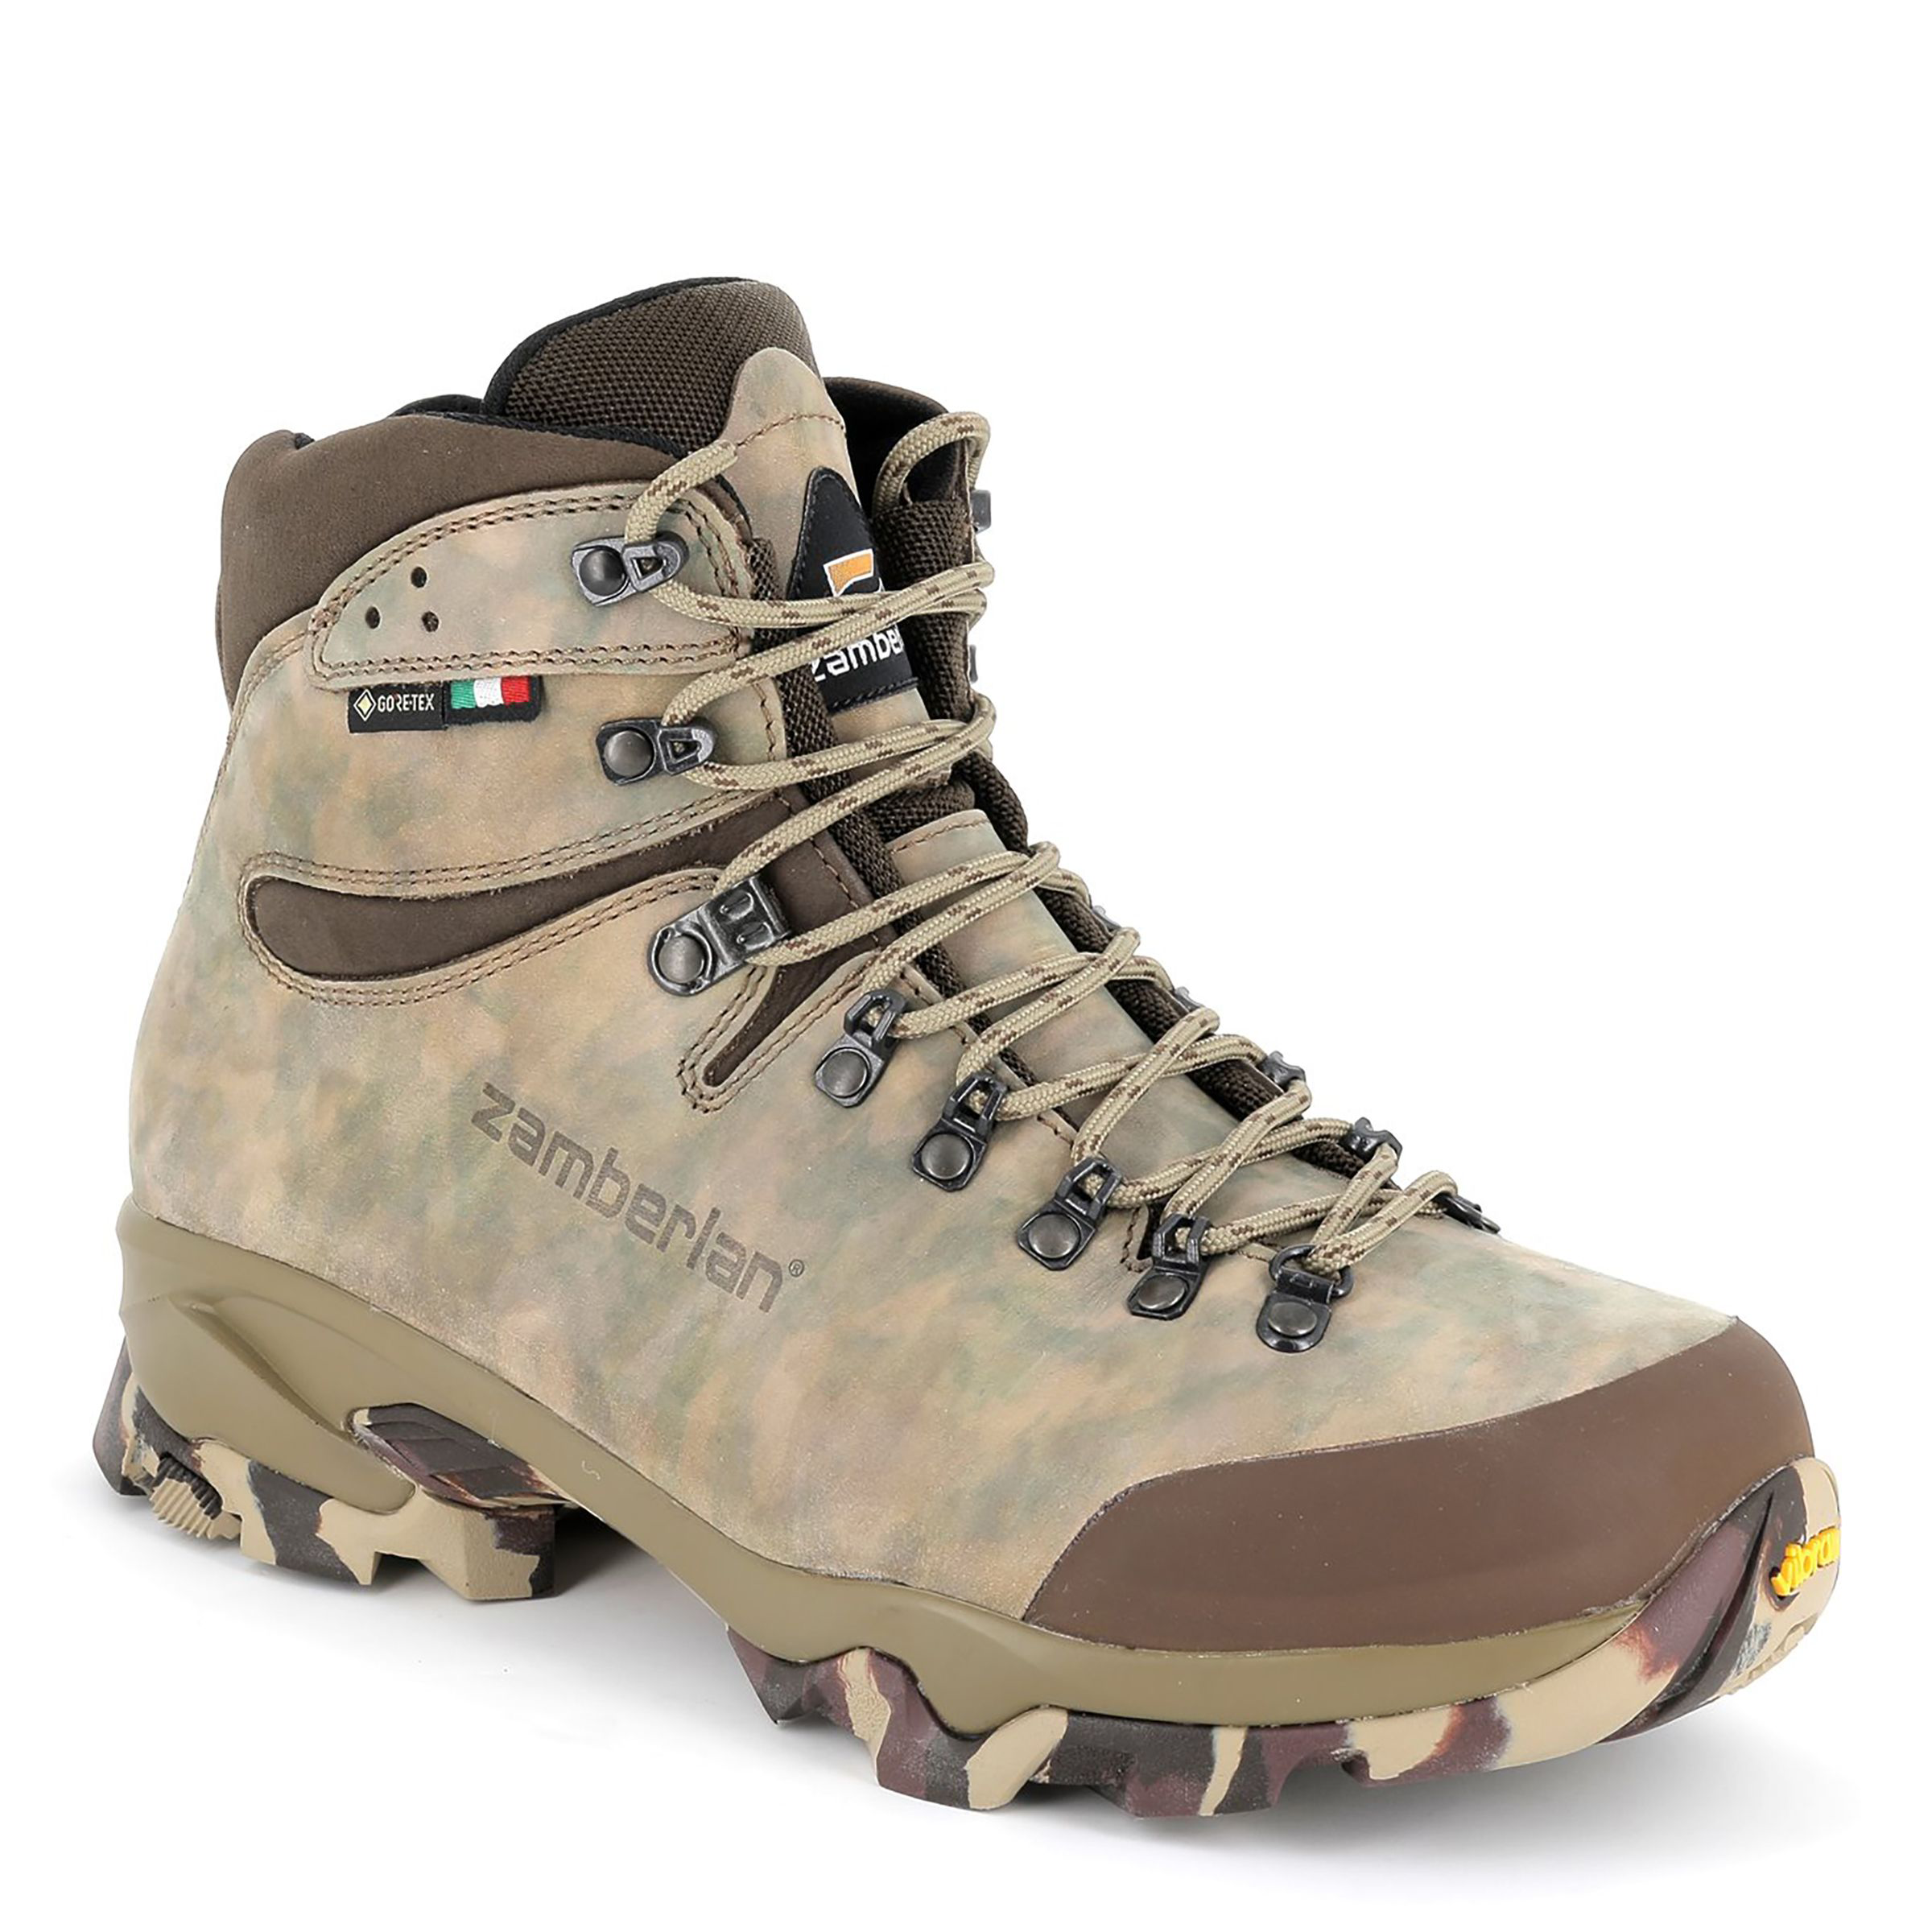 Zamberlan 1213 Leopard GTX RR GORE-TEX Hunting Boots for Men - Beige - 11.5W